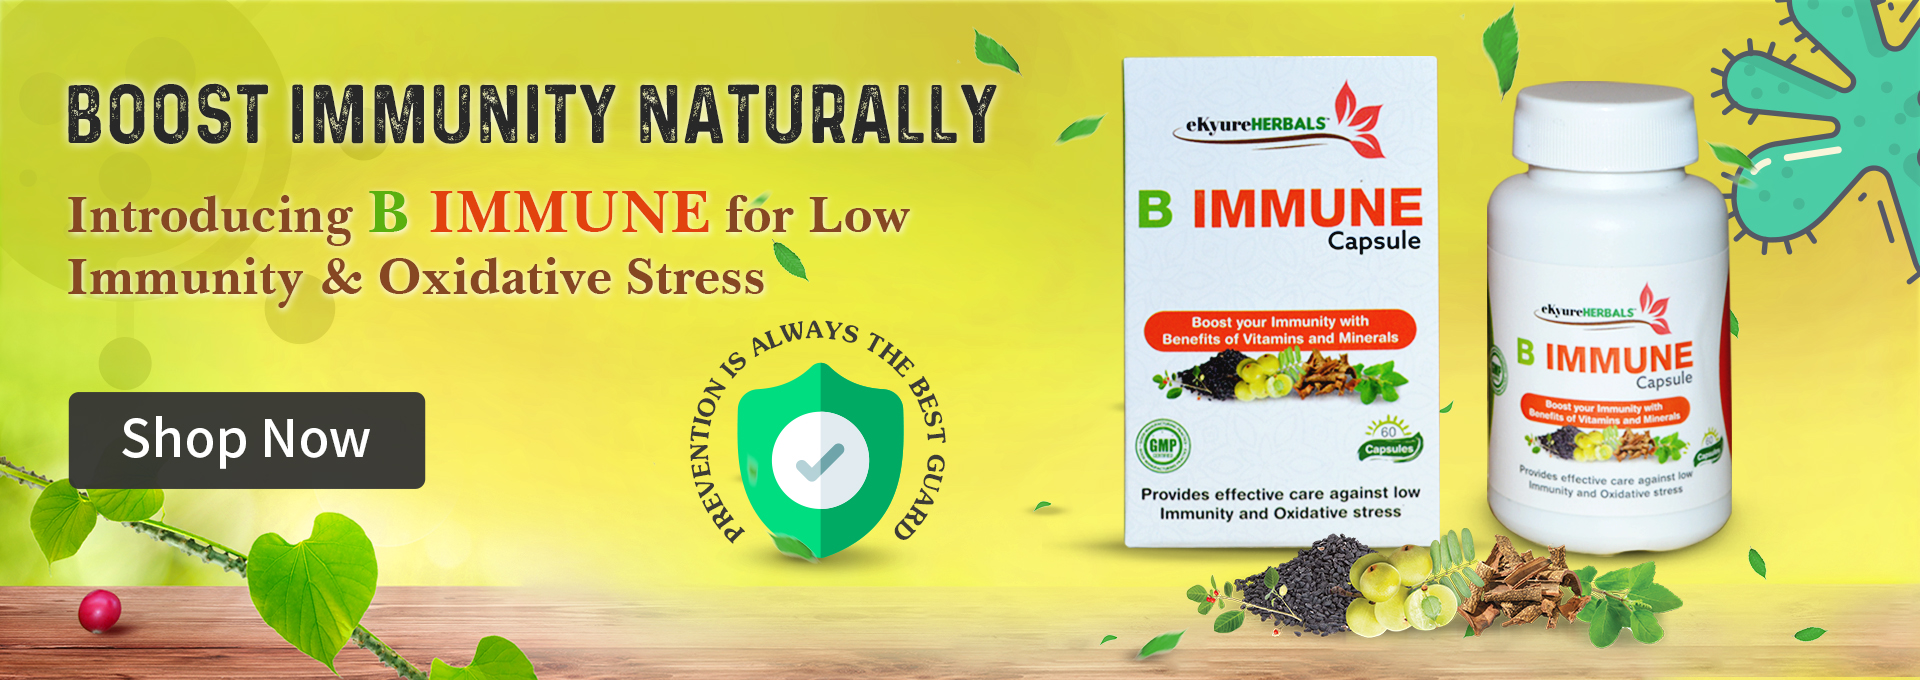 B immune, improve your immunity and health